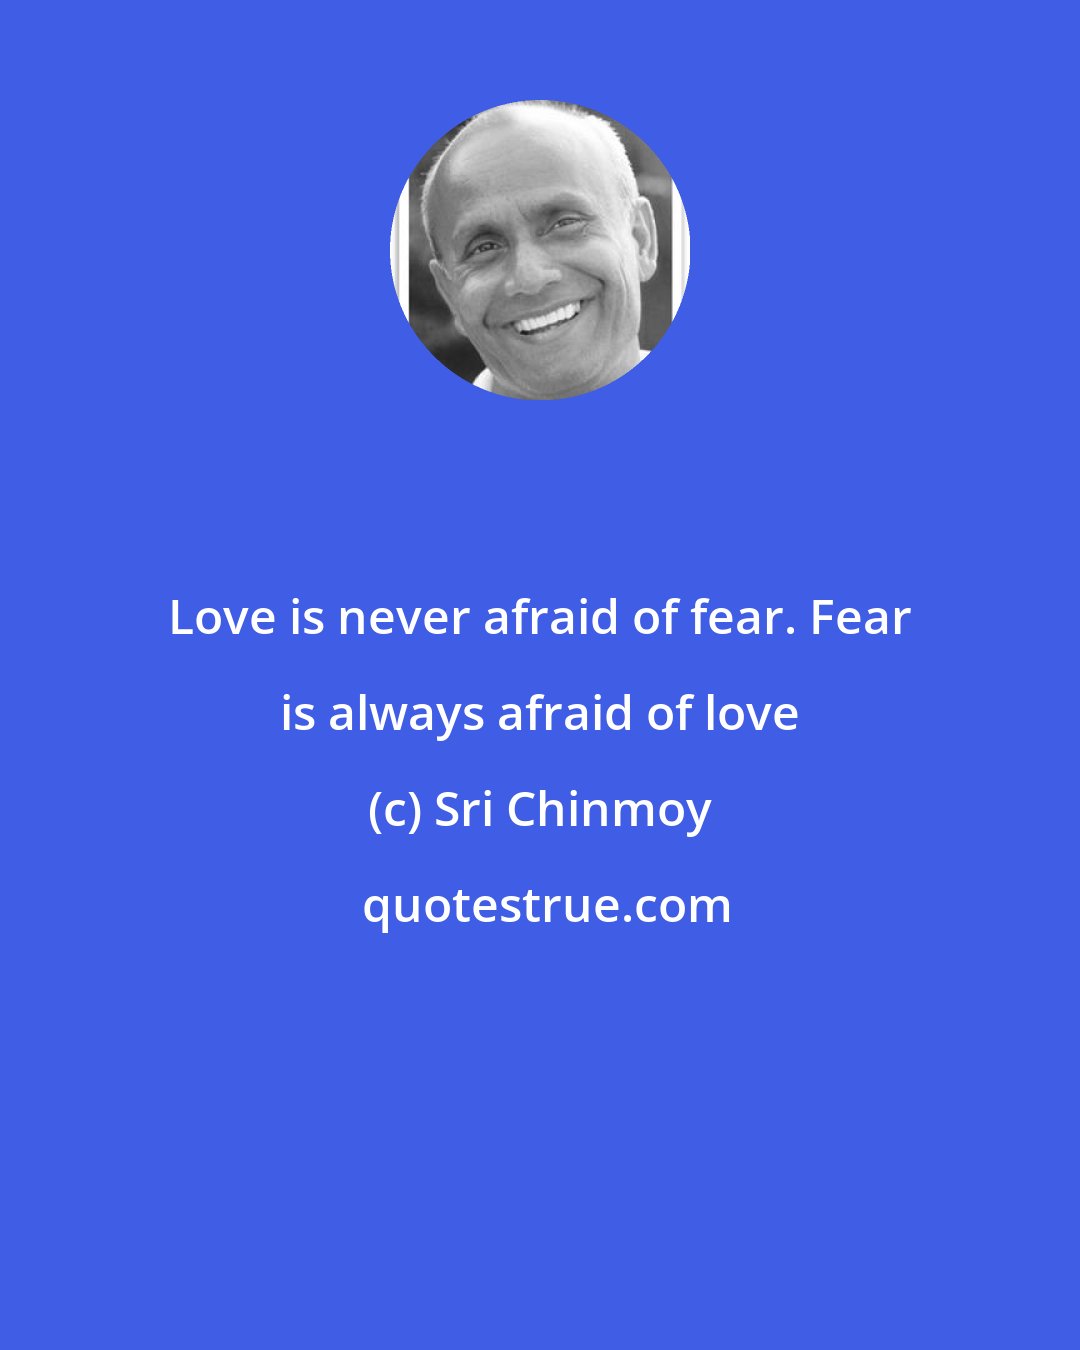 Sri Chinmoy: Love is never afraid of fear. Fear is always afraid of love